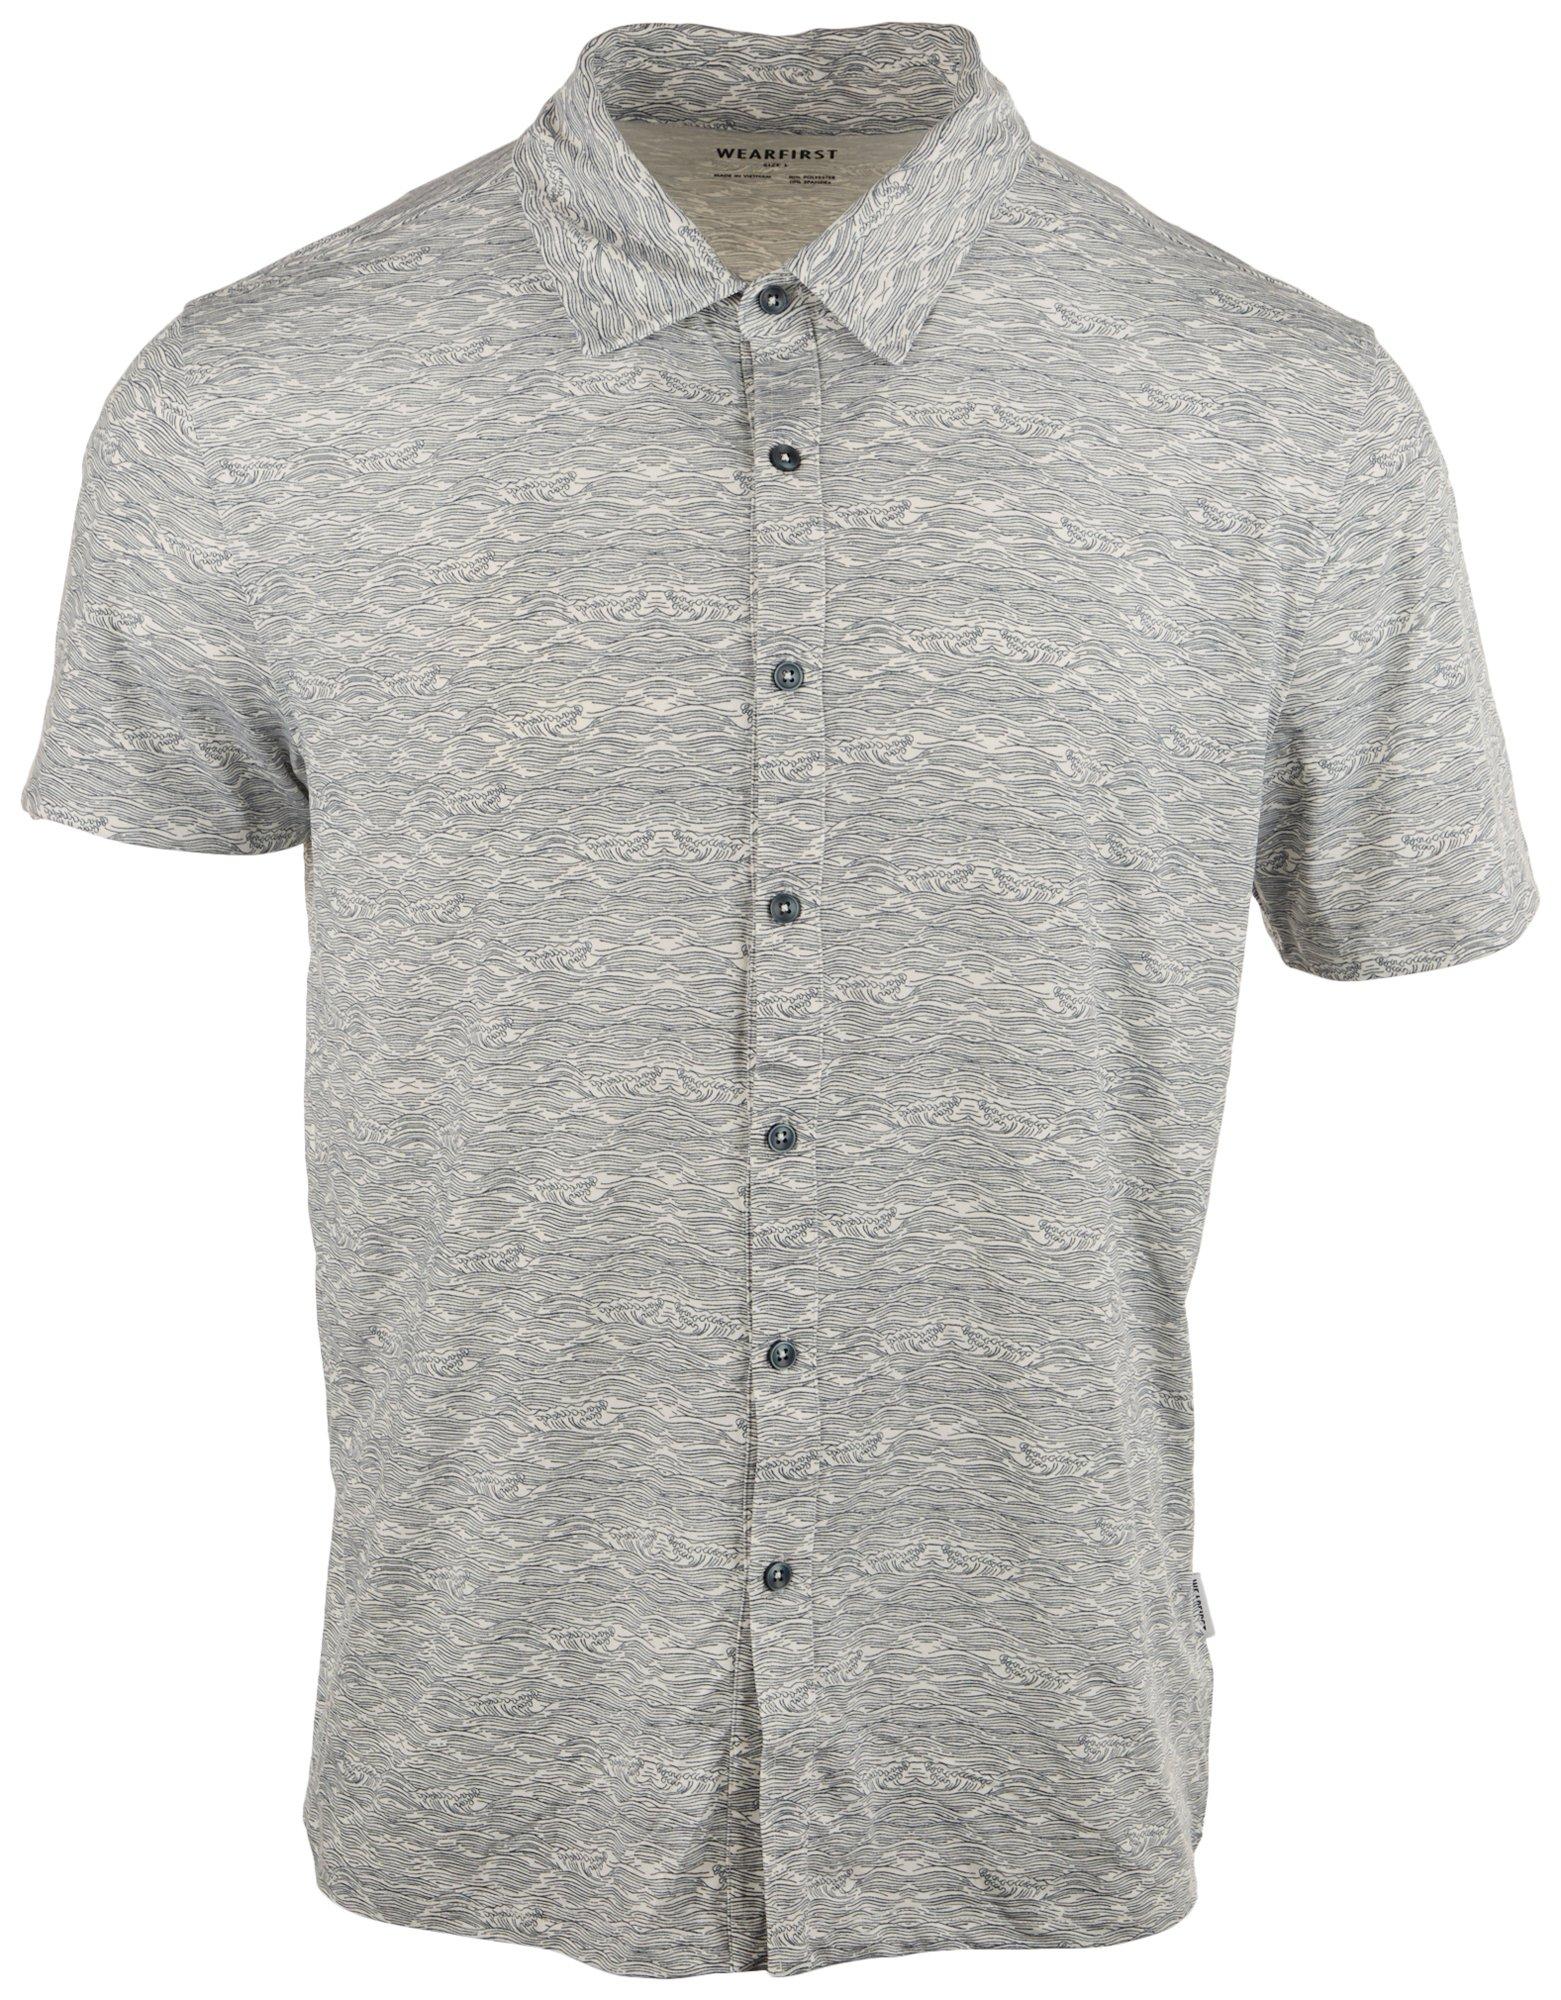 Wearfirst Mens Knit Tropical Print Short Sleeve Shirt